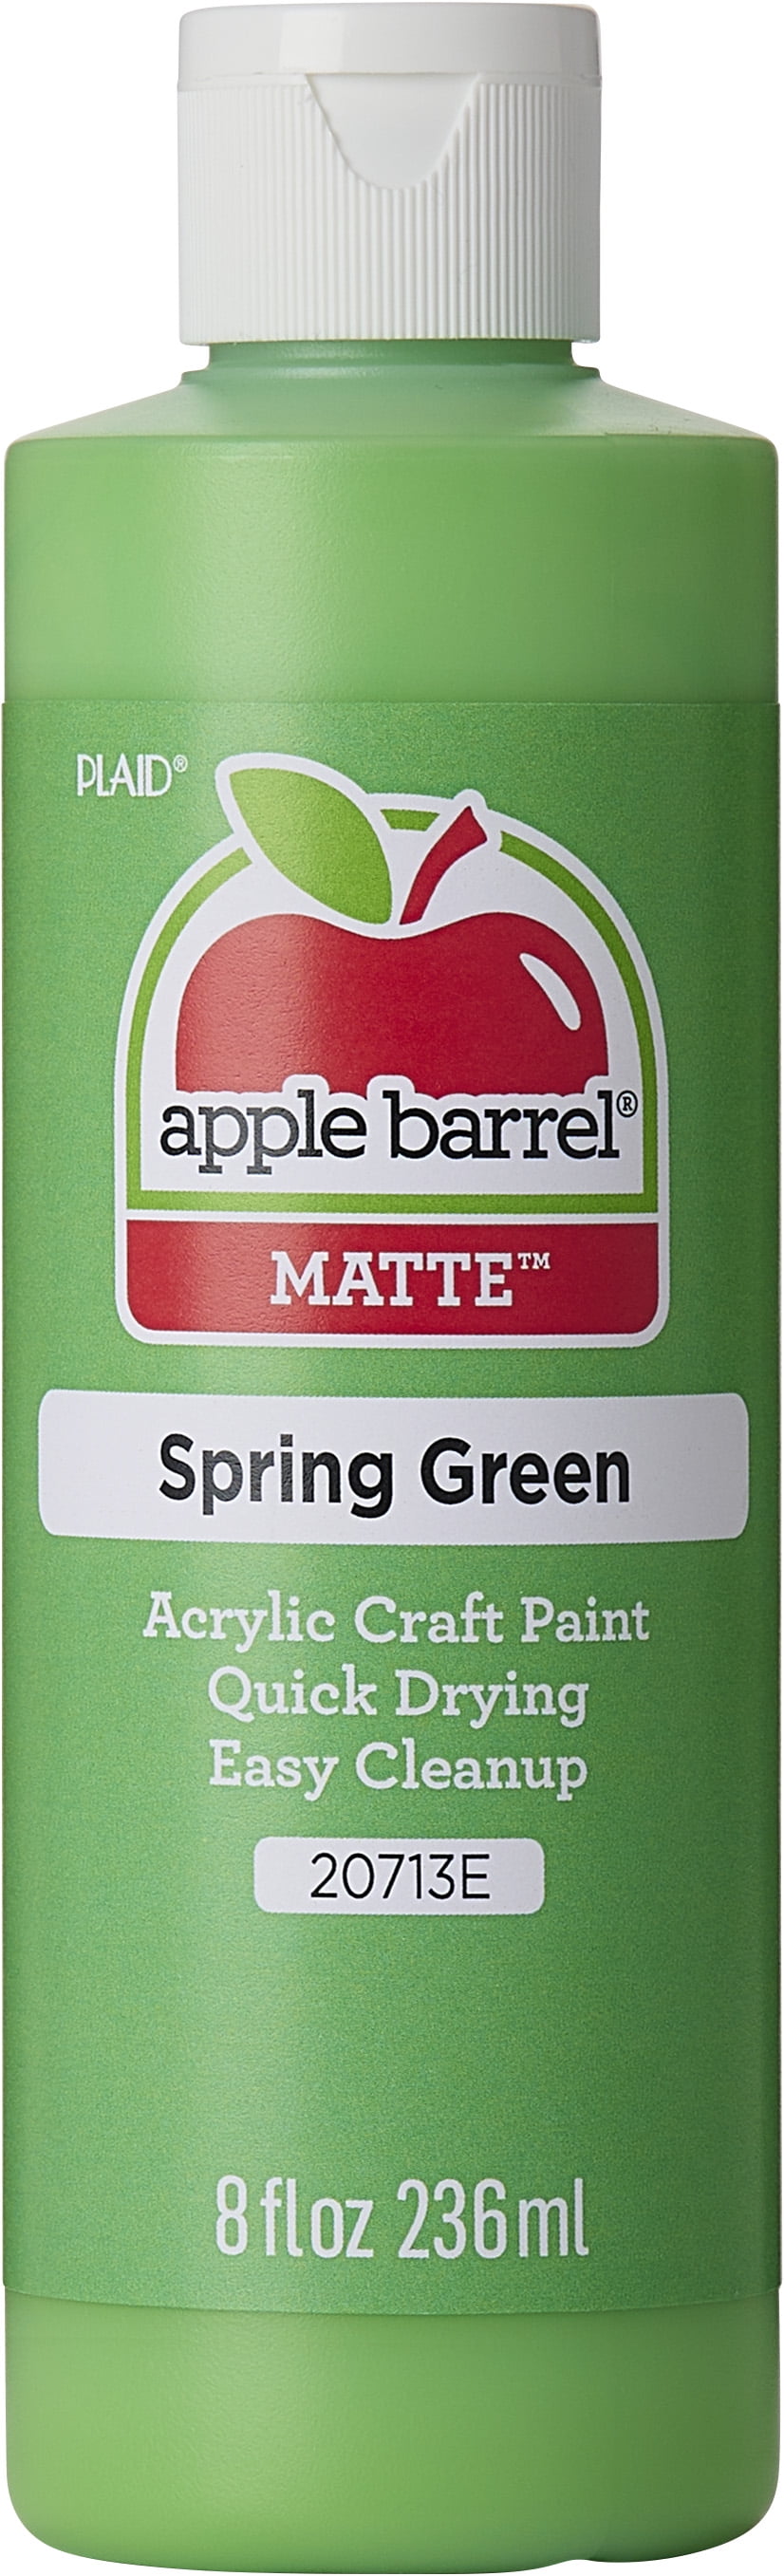 Apple Barrel crylic Craft Paint, Matte Finish, Spring Green, 8 fl oz